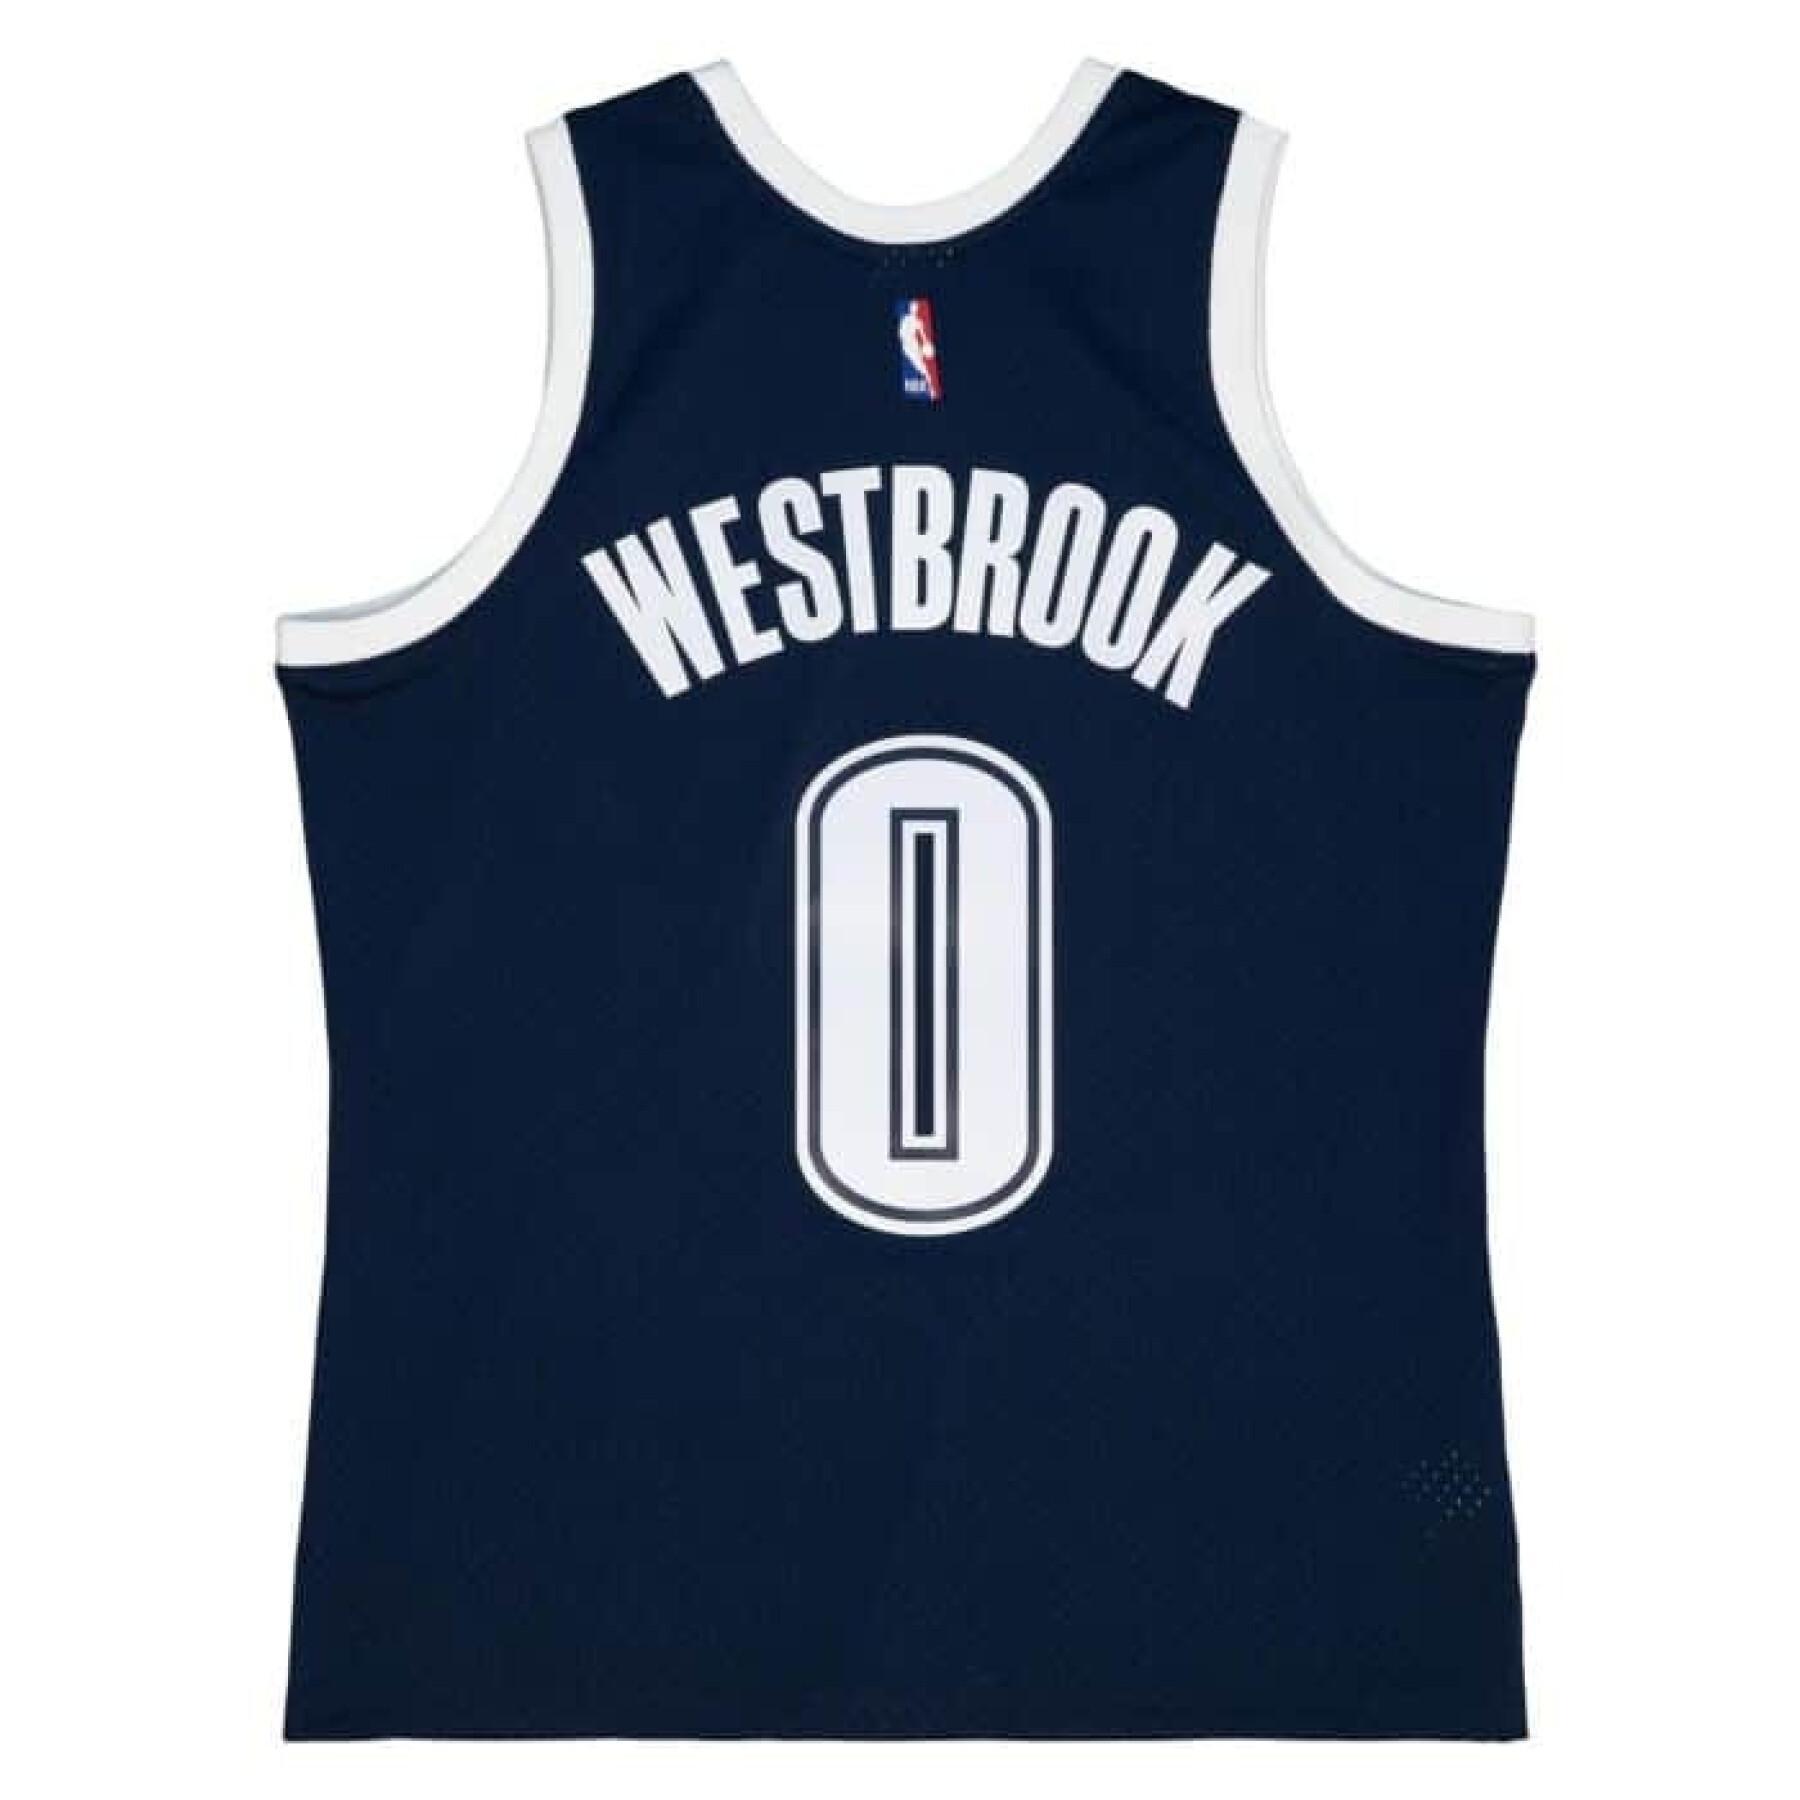 Maillot NBA Oklahoma City Thunder Russell Westbrook 2015-16